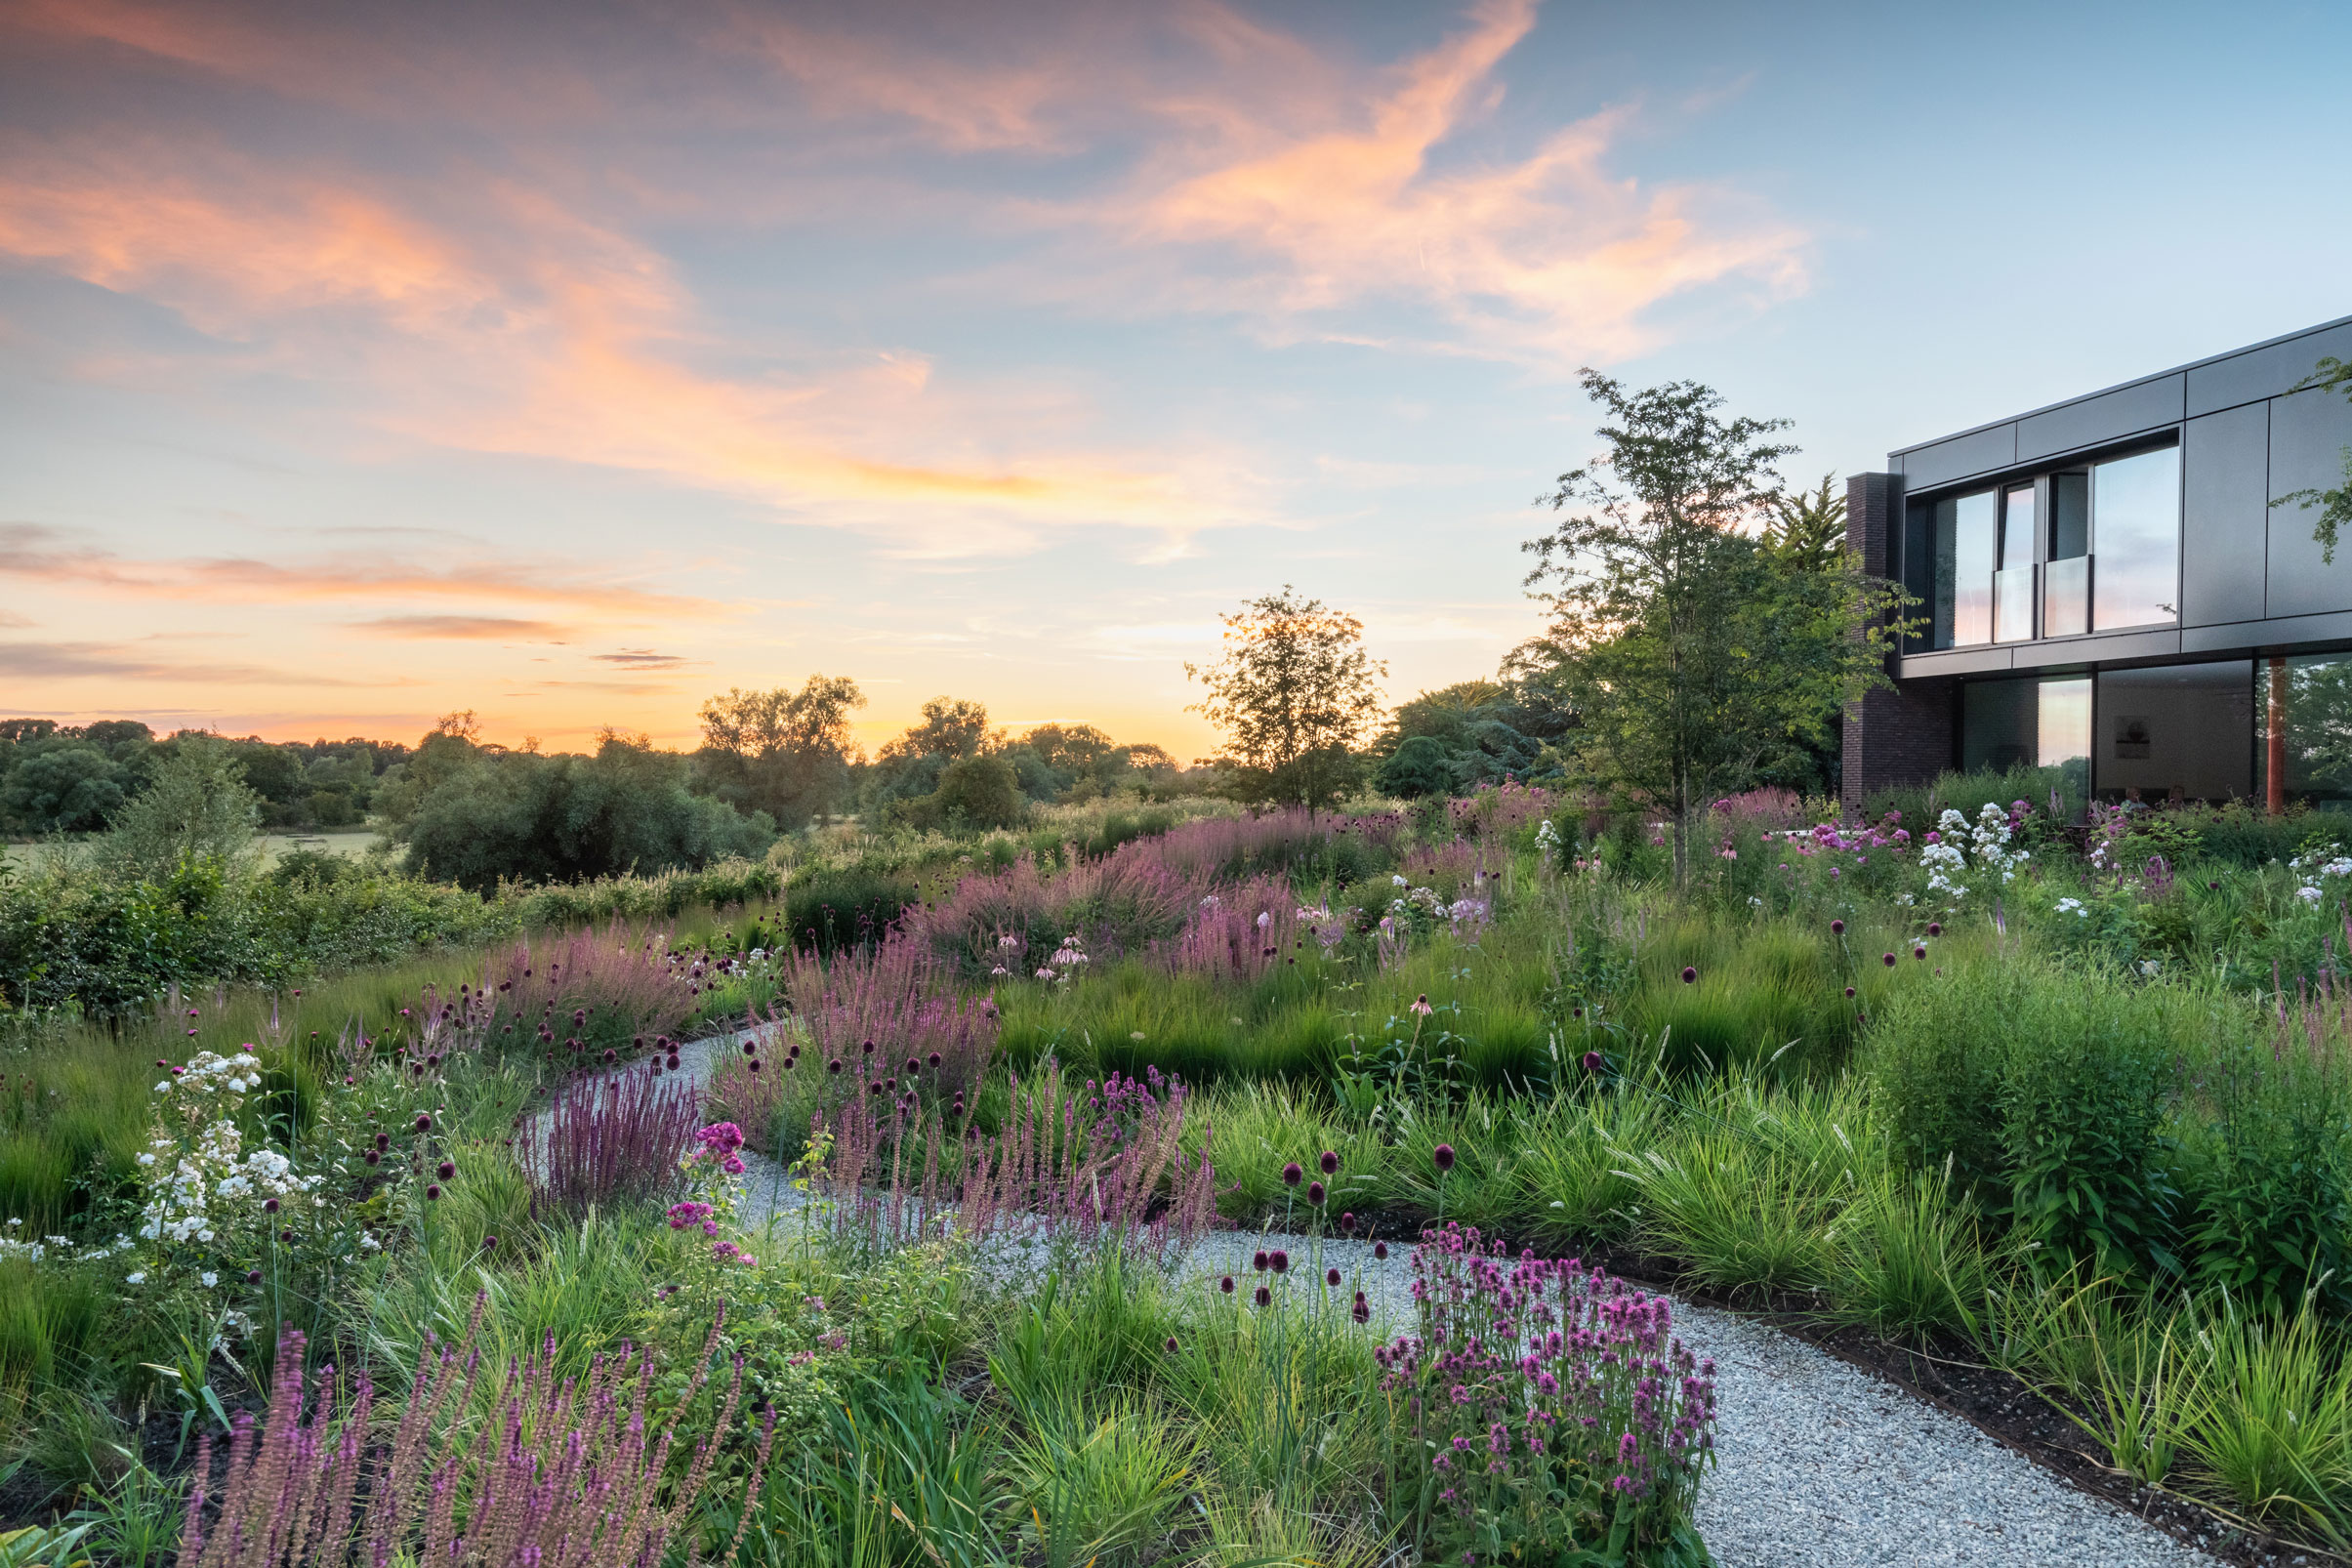 Colm Joseph garden designer cambridgeshire rose meadow modern architecture naturalistic planting design gravel path